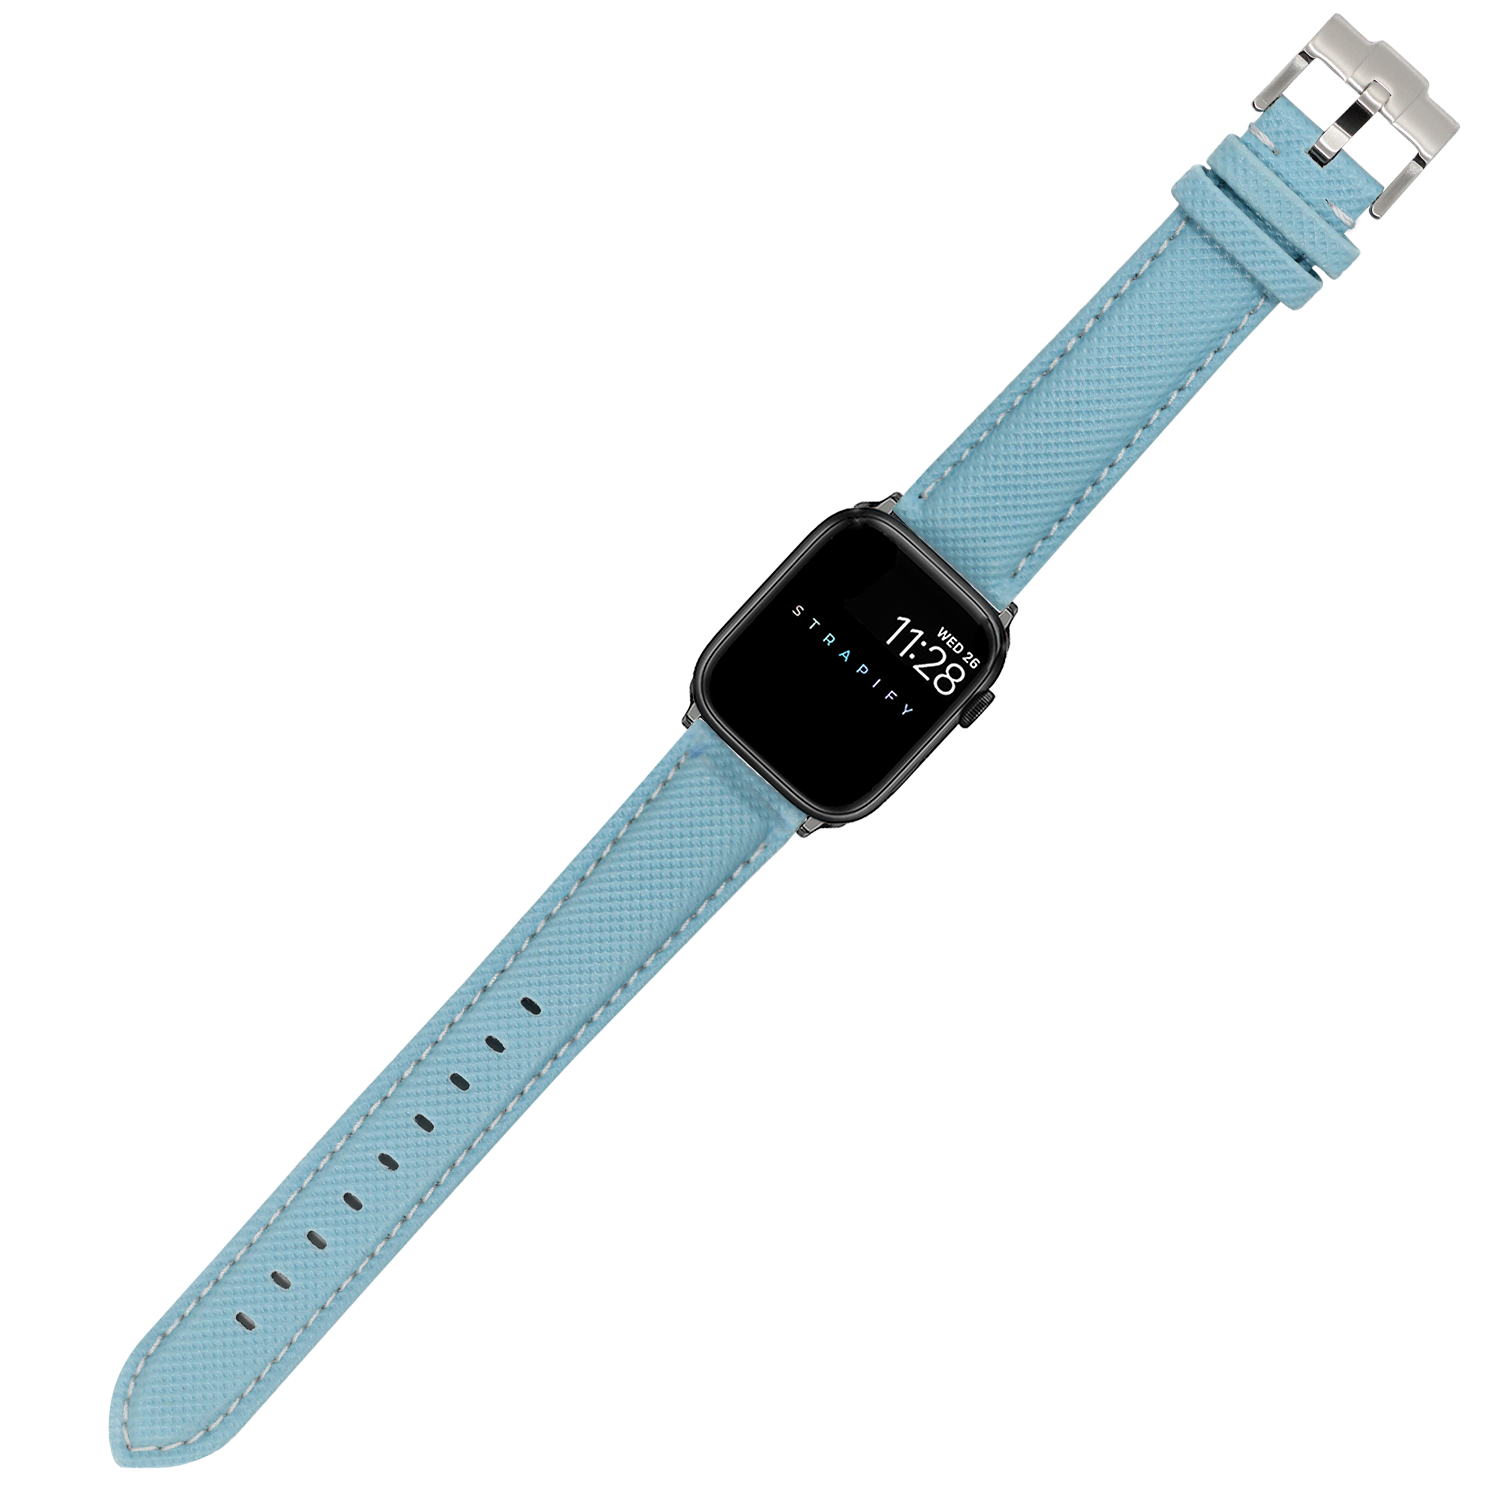 [Apple Watch] Sailcloth - Sky Blue | White Stitching